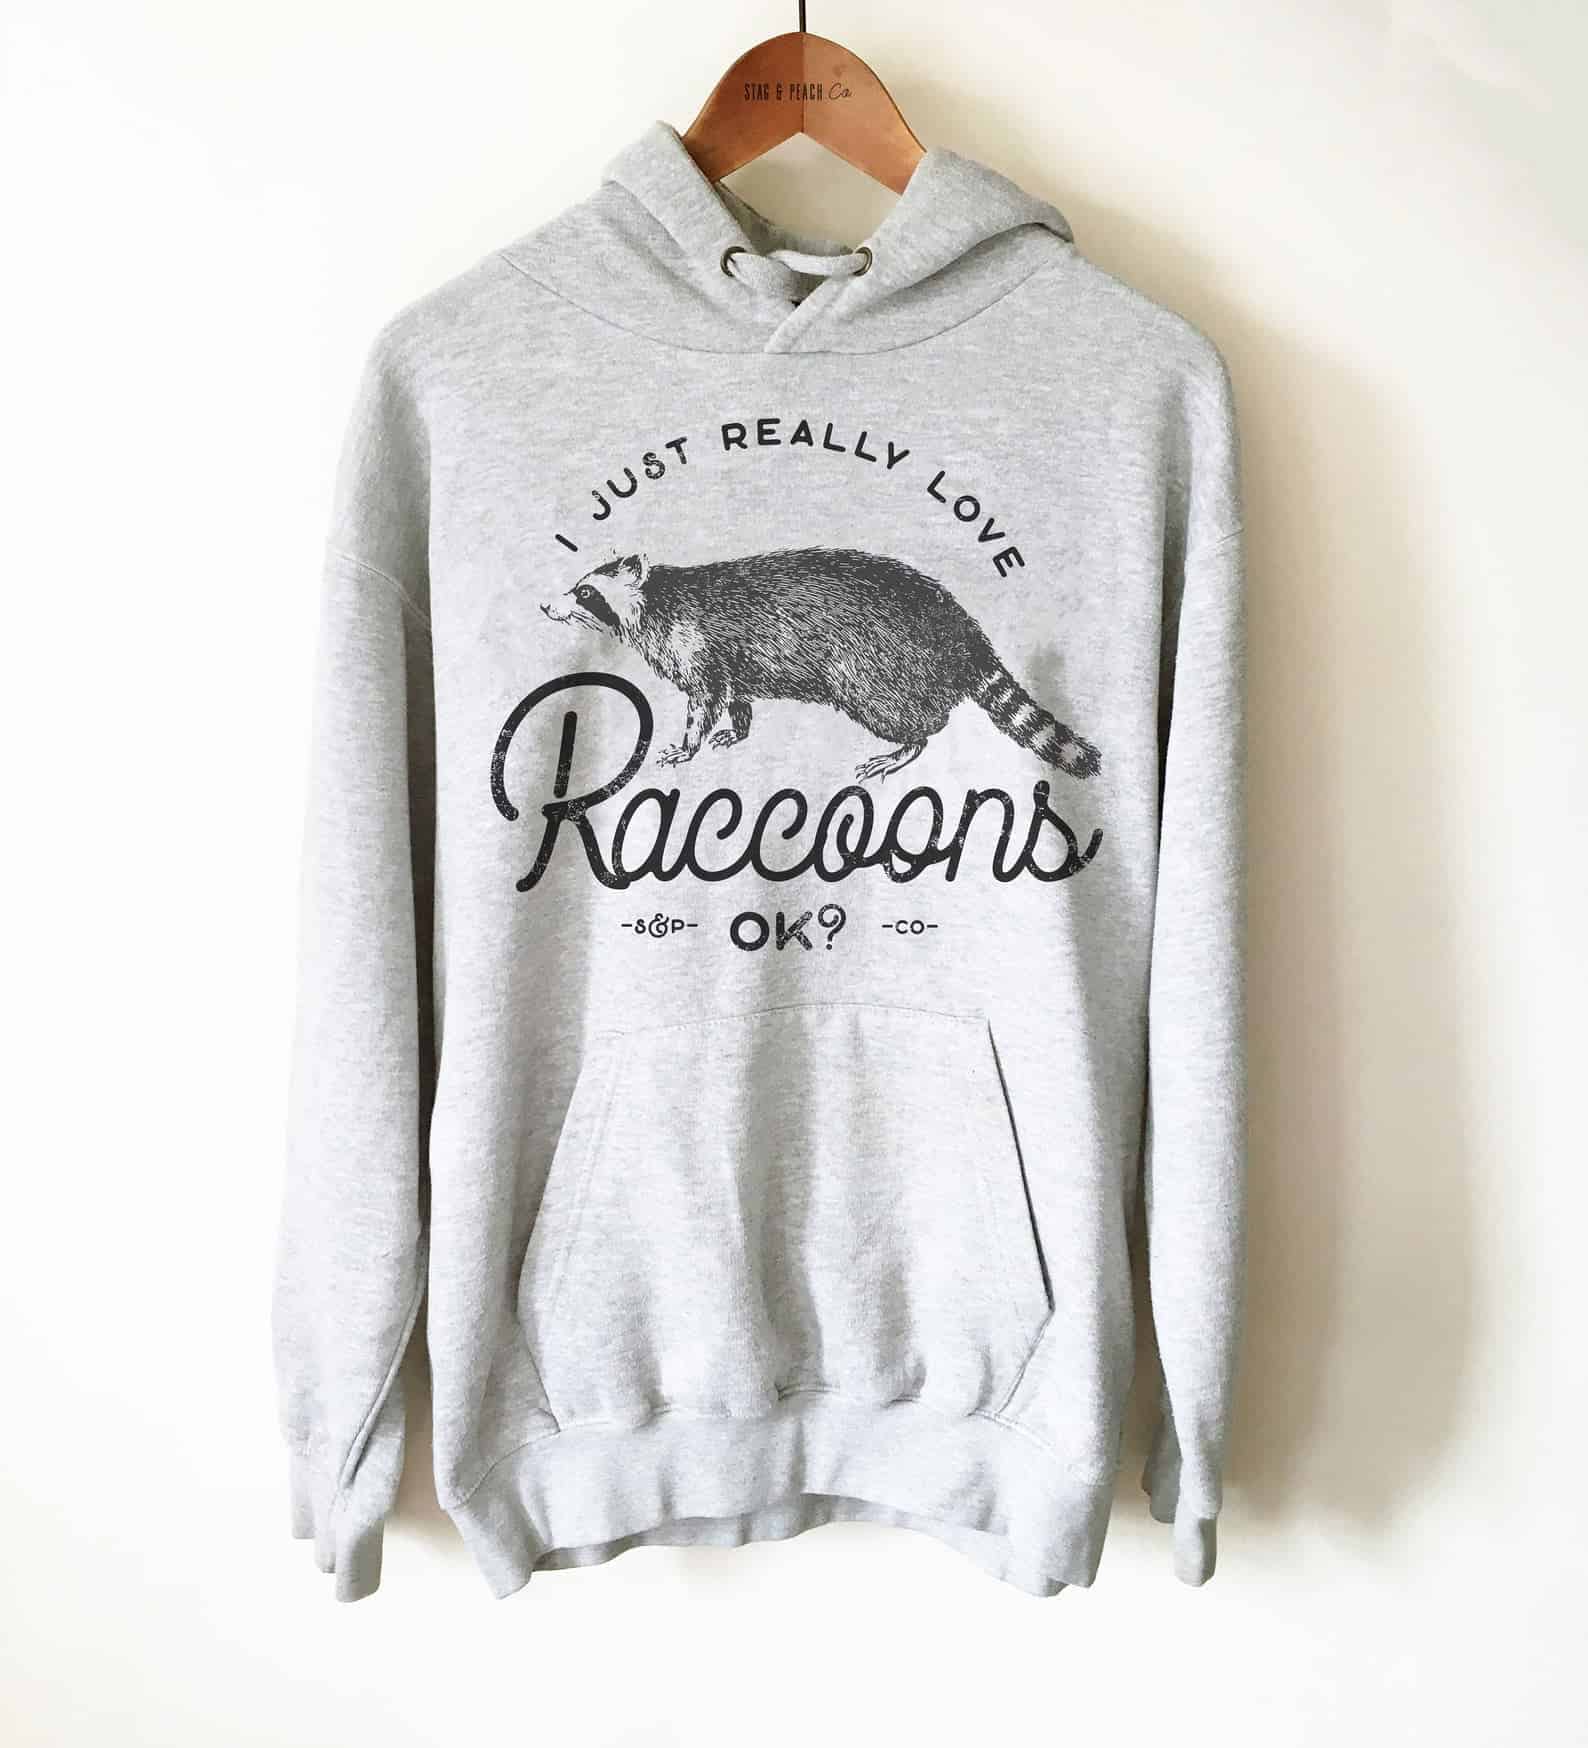 Loves Raccoons Shirt on Etsy